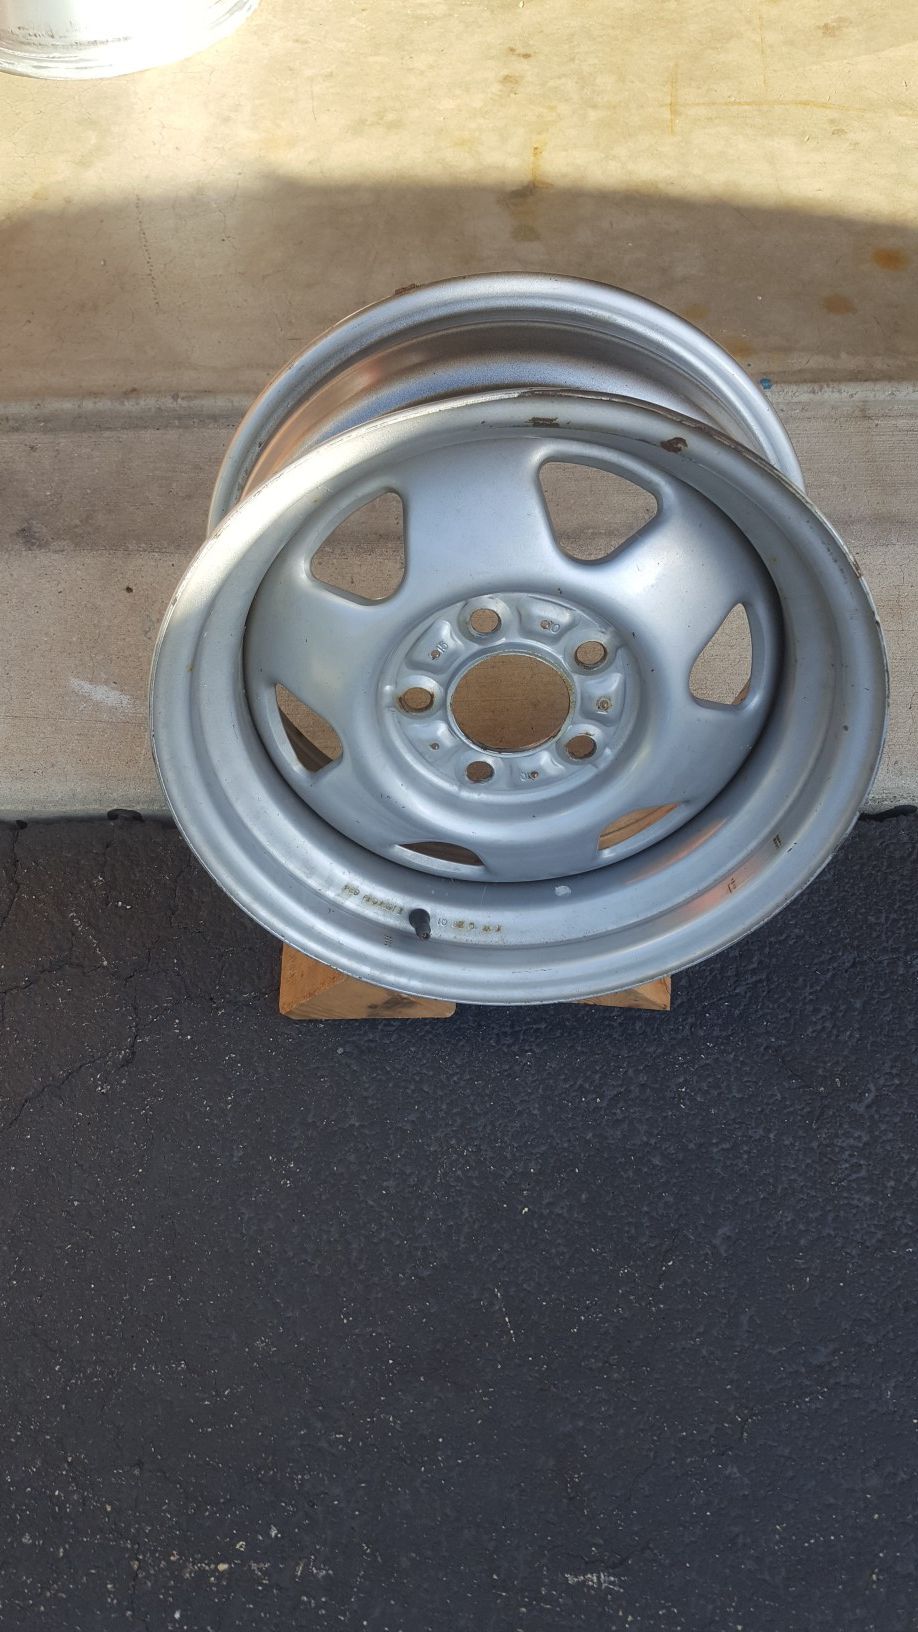 15" × 7" steel wheel on a 4.5" bolt circle